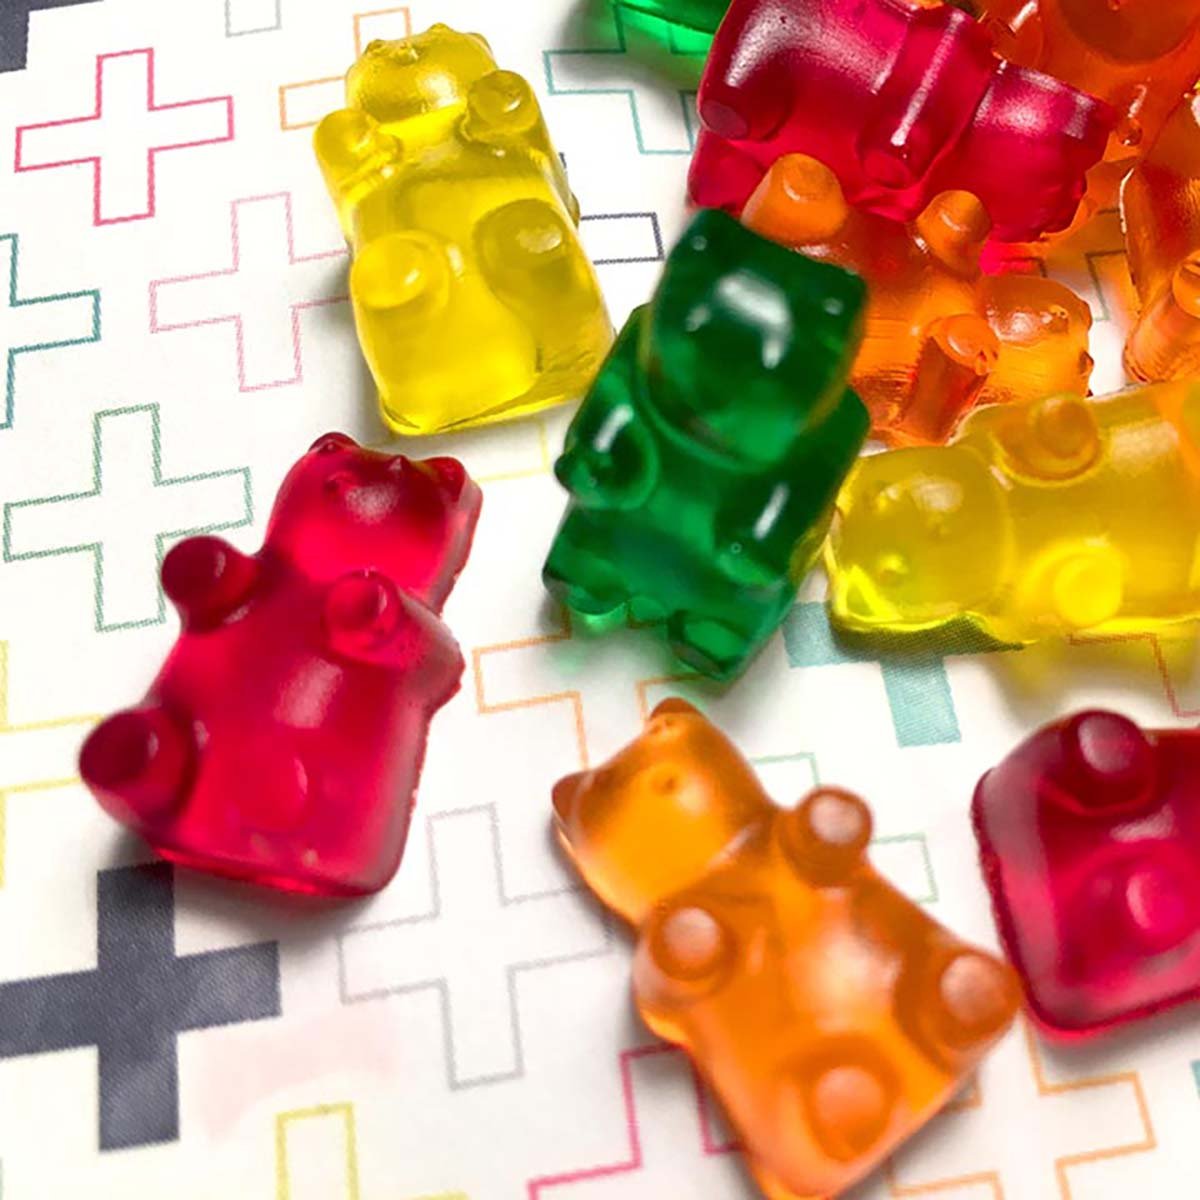 https://www.resolutioneats.com/wp-content/uploads/2019/08/Gummy-Bears-Featured.jpg